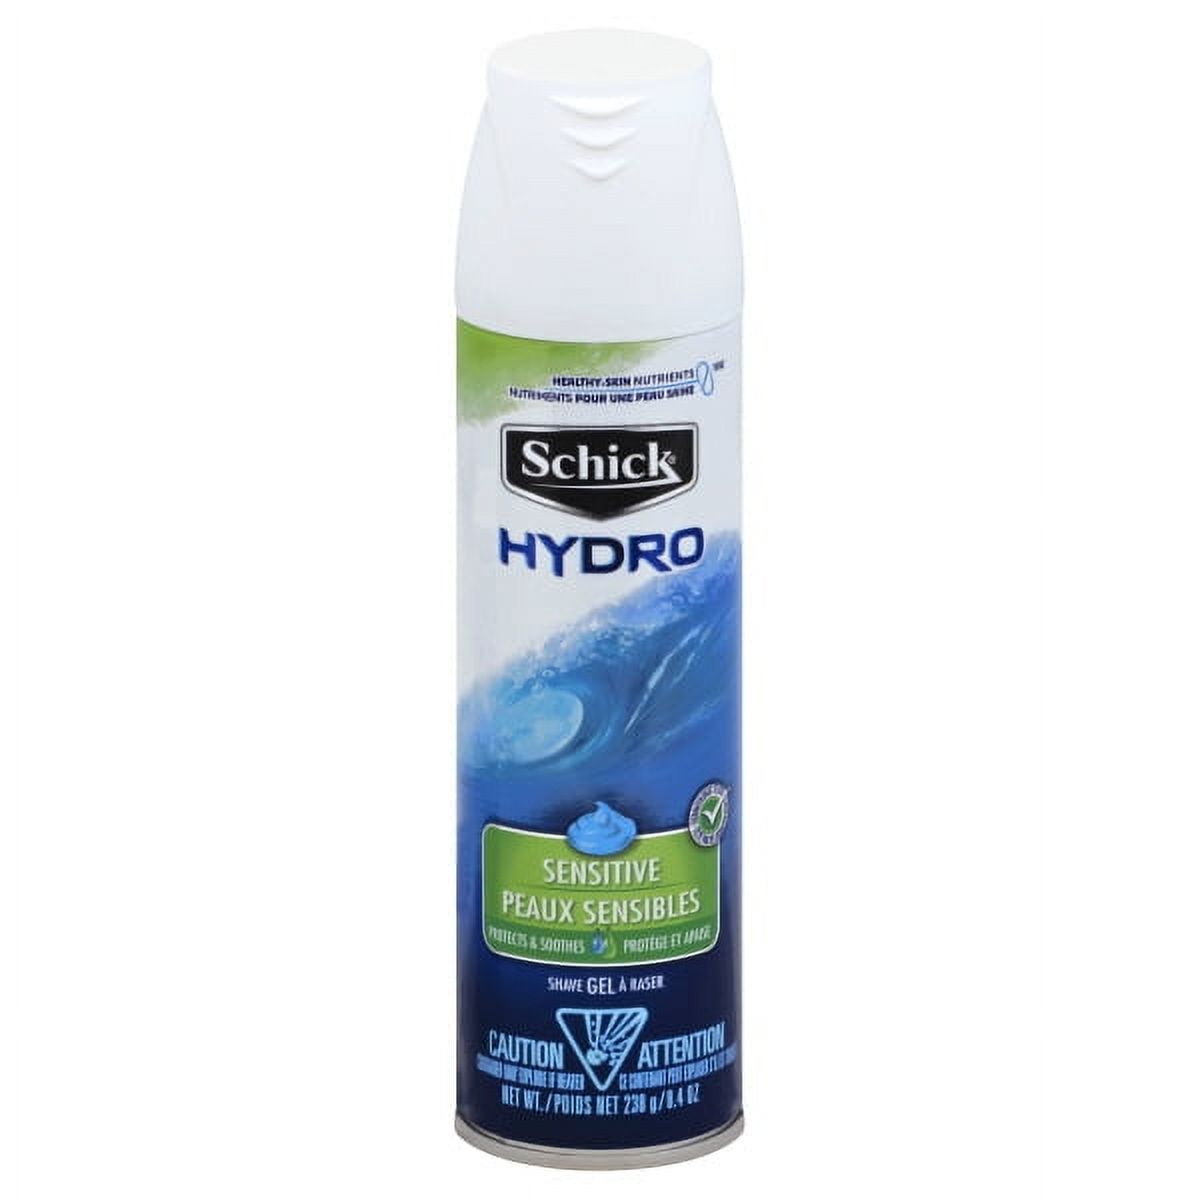 Schick Hydro Sensitive Shave Gel 8.4 oz 238 g - image 1 of 2